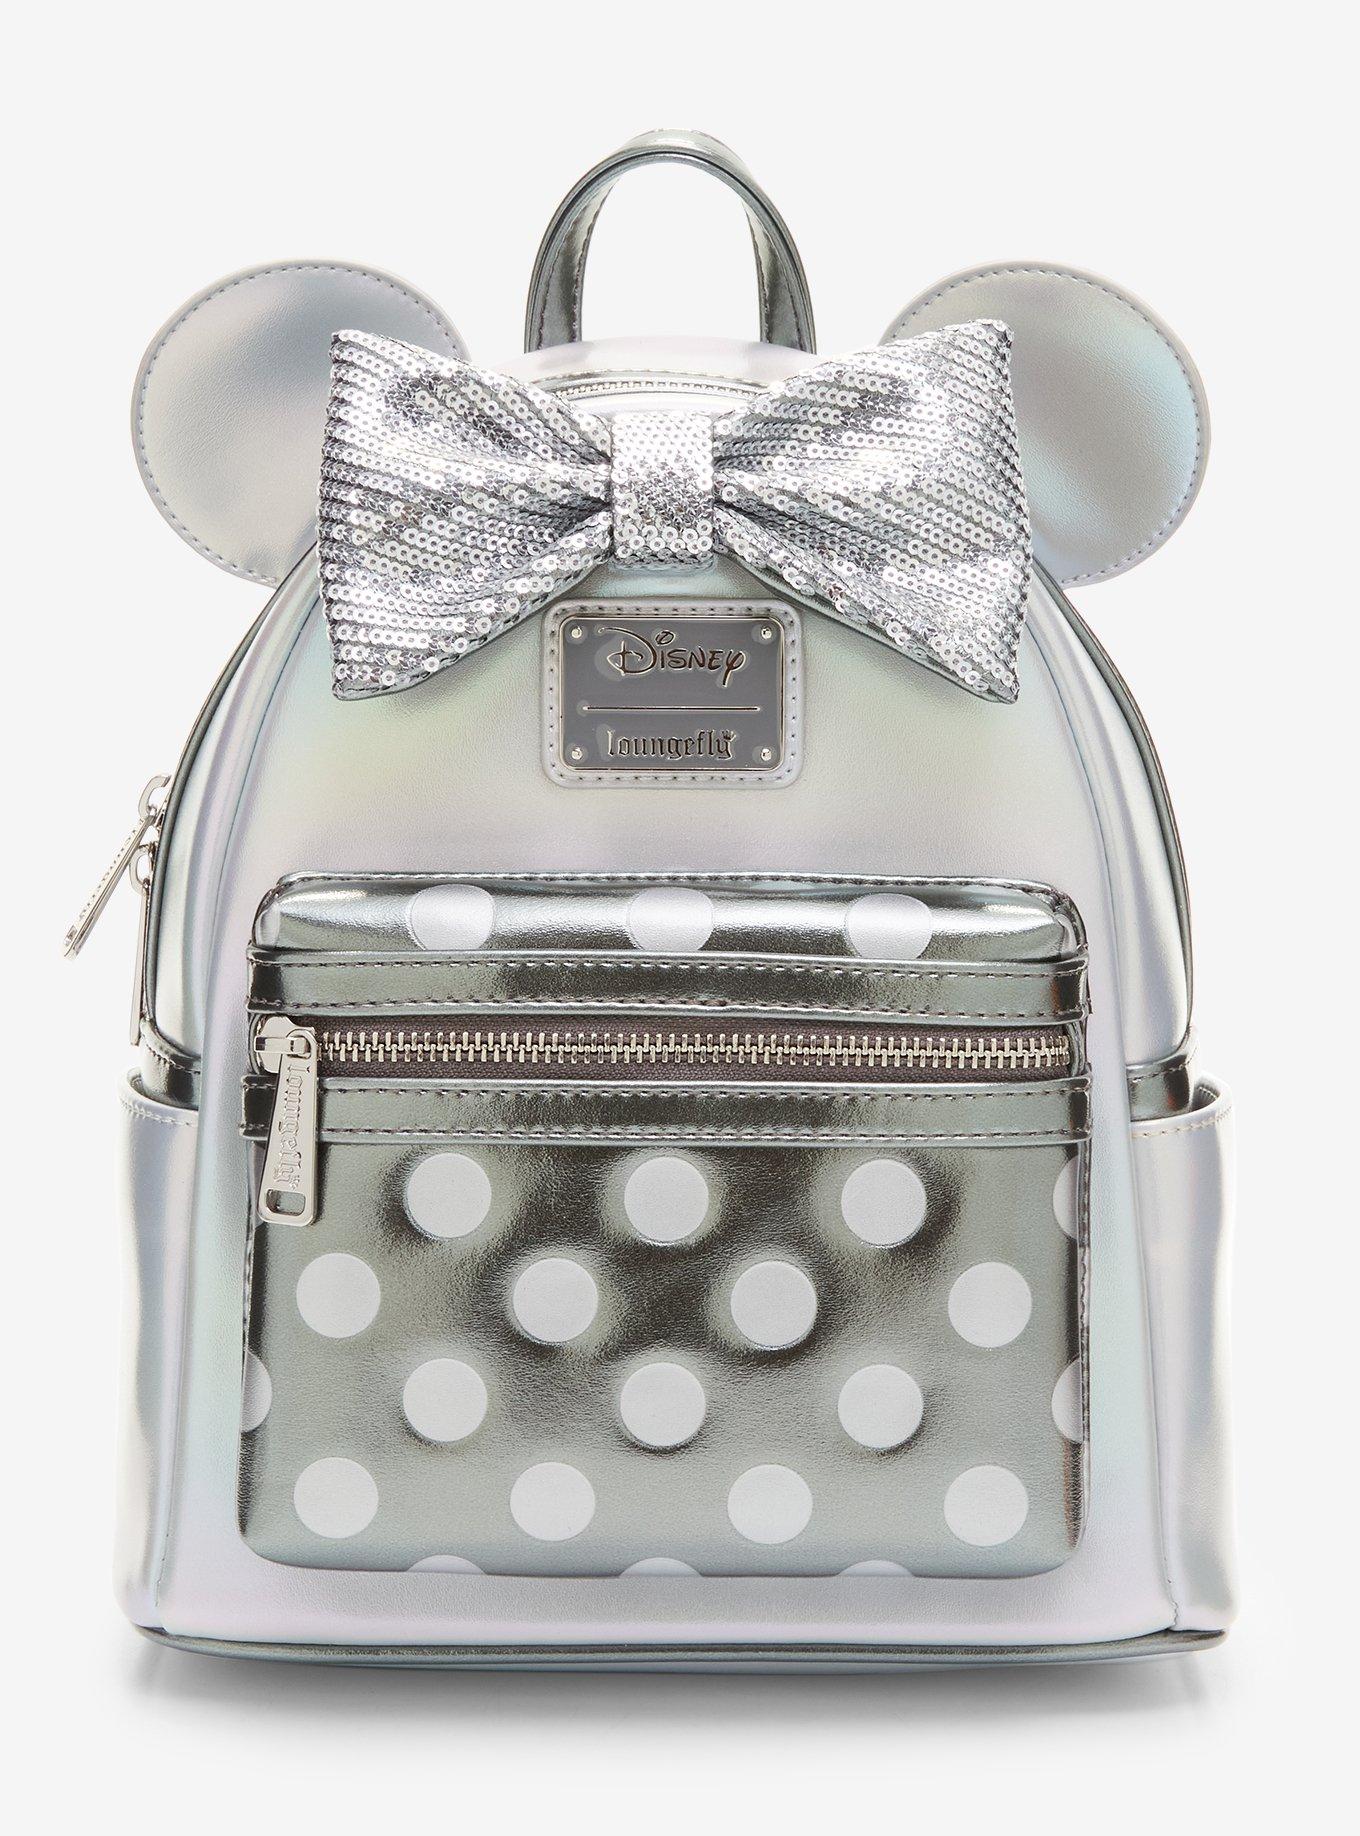 101 Dalmatians Loungefly Mini Backpack – Disney100